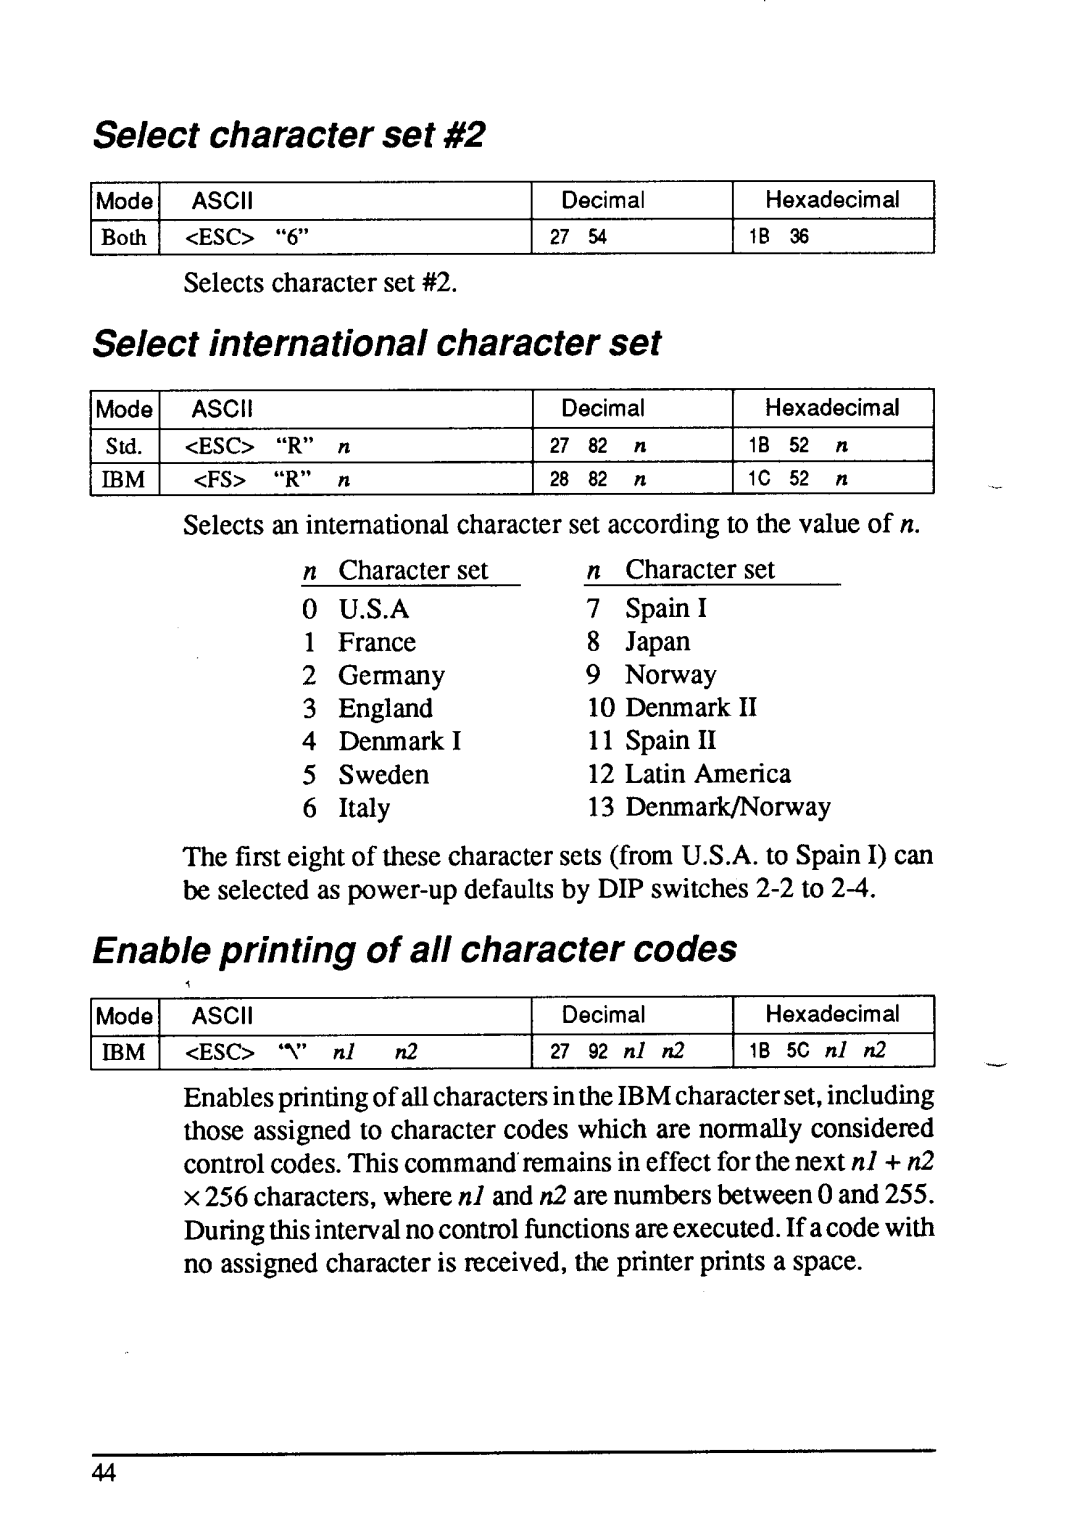 Star Micronics LC24-15 Select character set #2, Select international character set, Enable printing of all character codes 